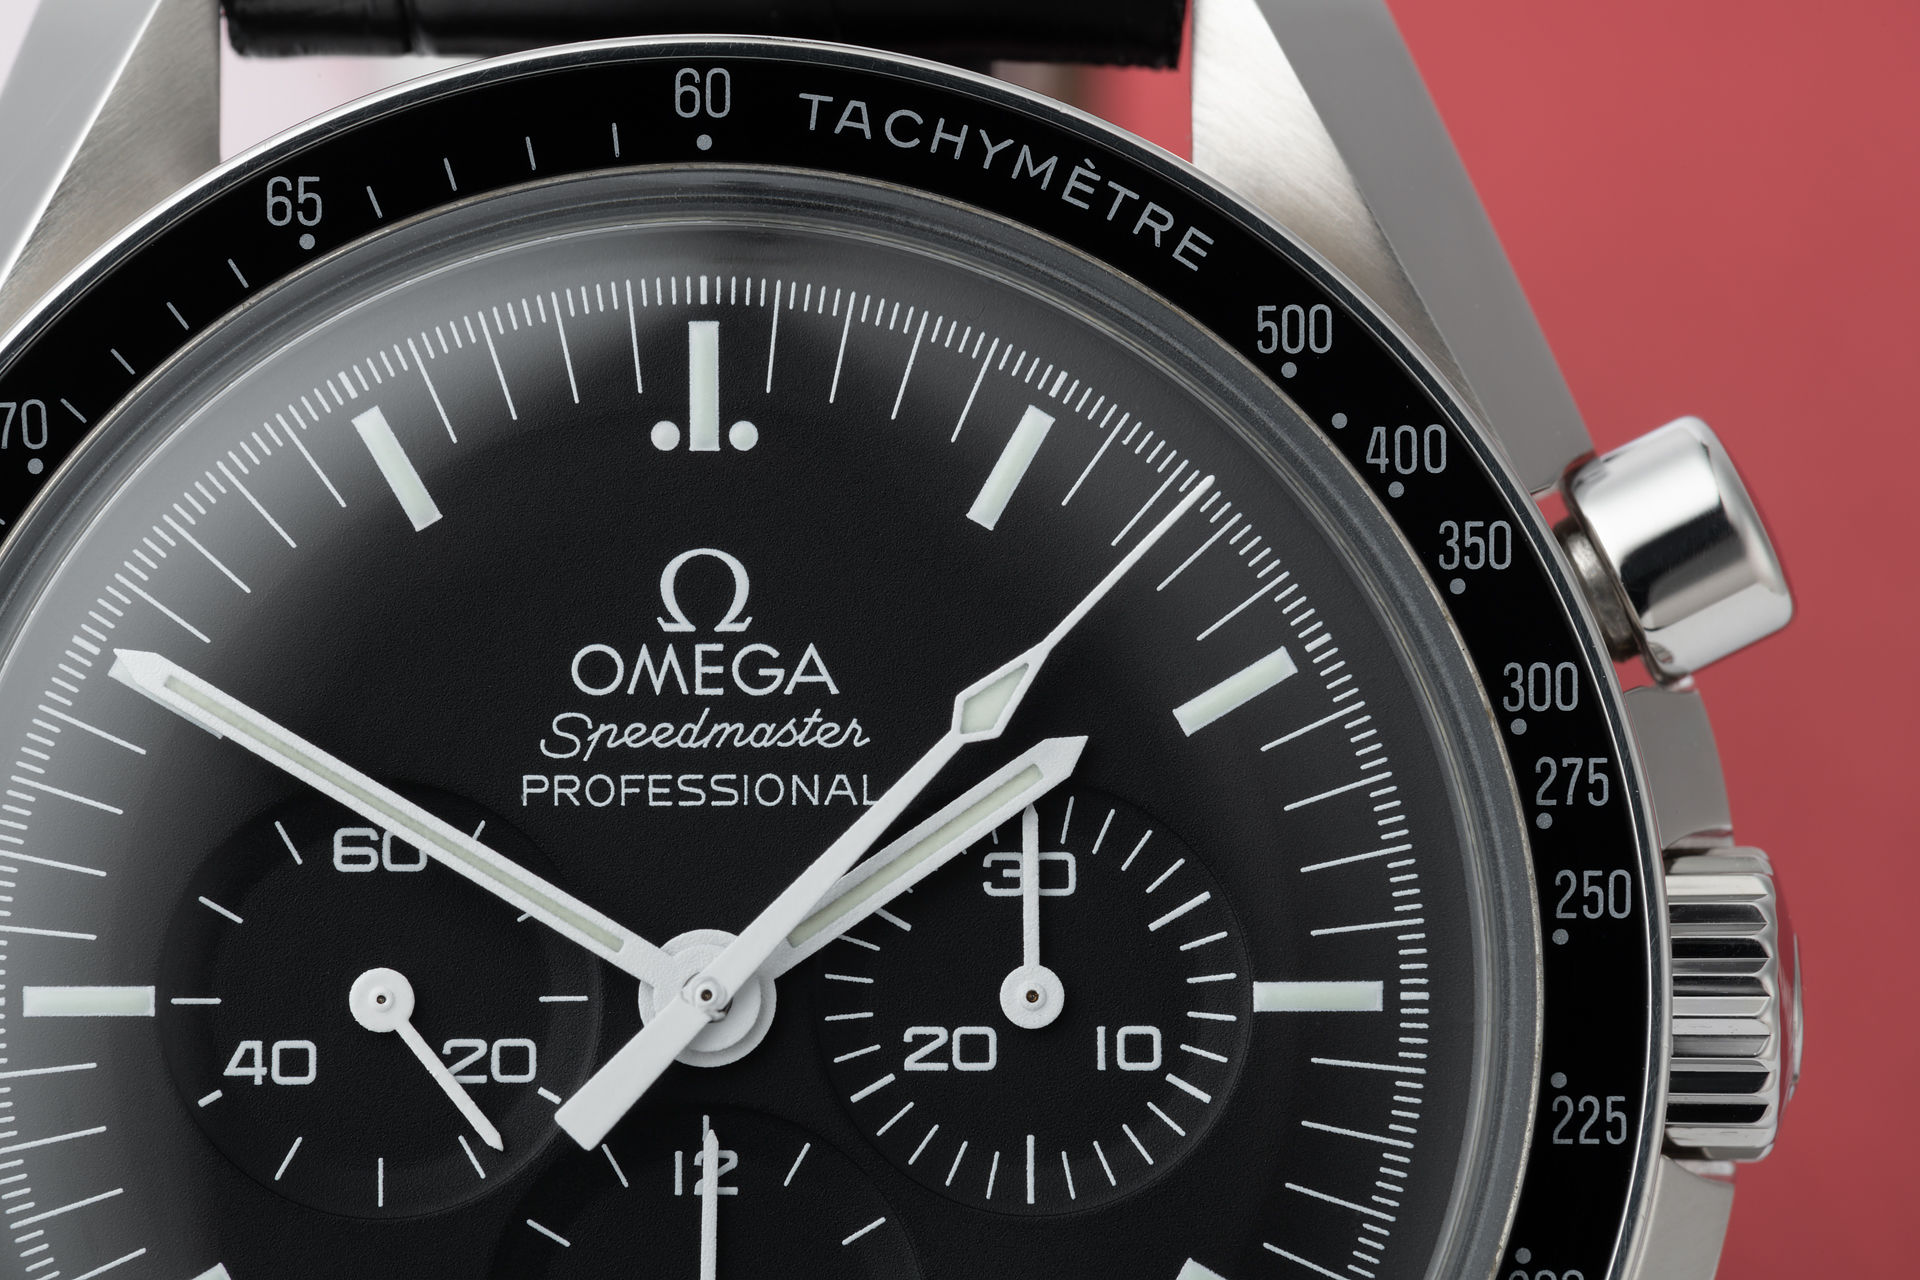 ref 311.33.42.30.01.001 | 'Nearly New' Full Set | Omega Speedmaster Professional